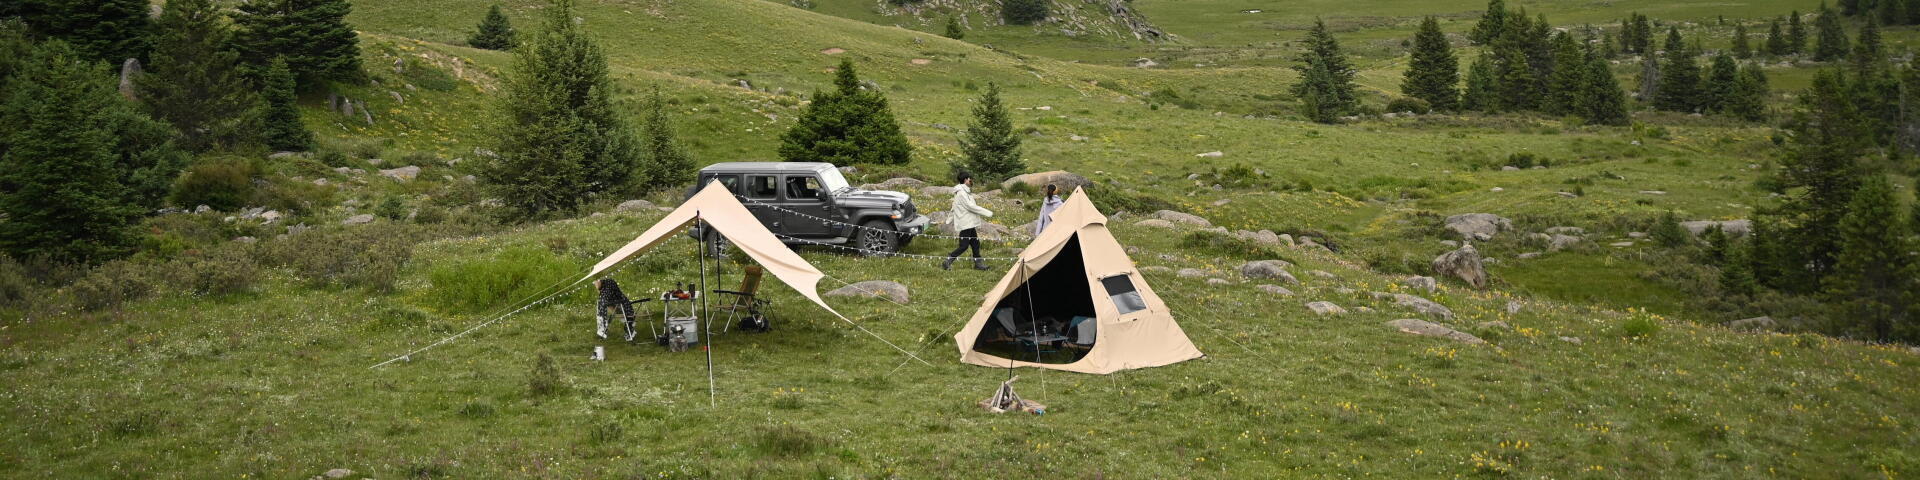 2 tents in a field